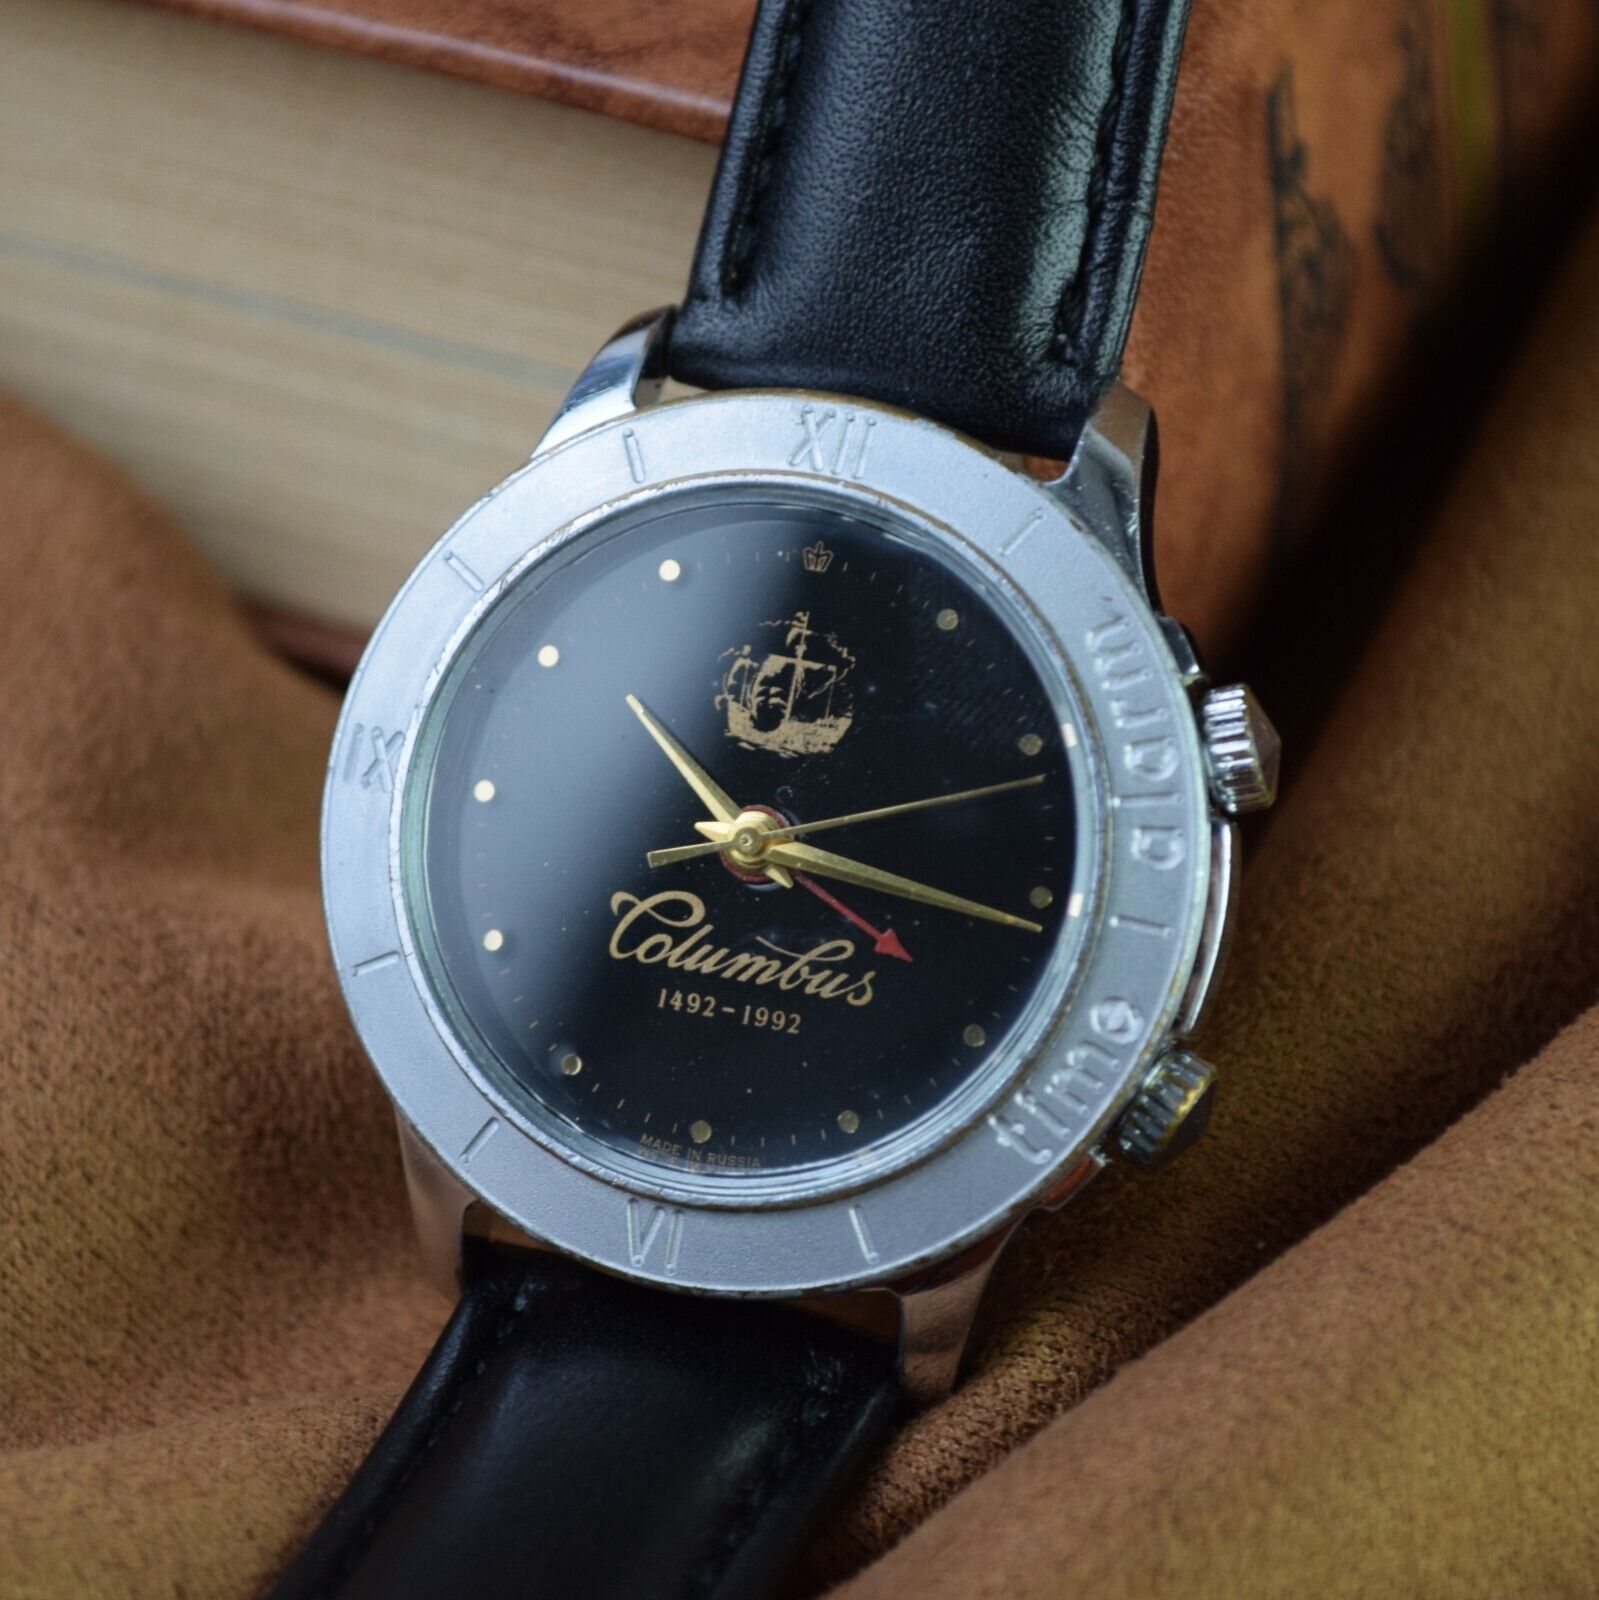 Soviet Wristwatch POLJOT Alarm Signal Vintage Russian USSR Mechanical Mens Watch